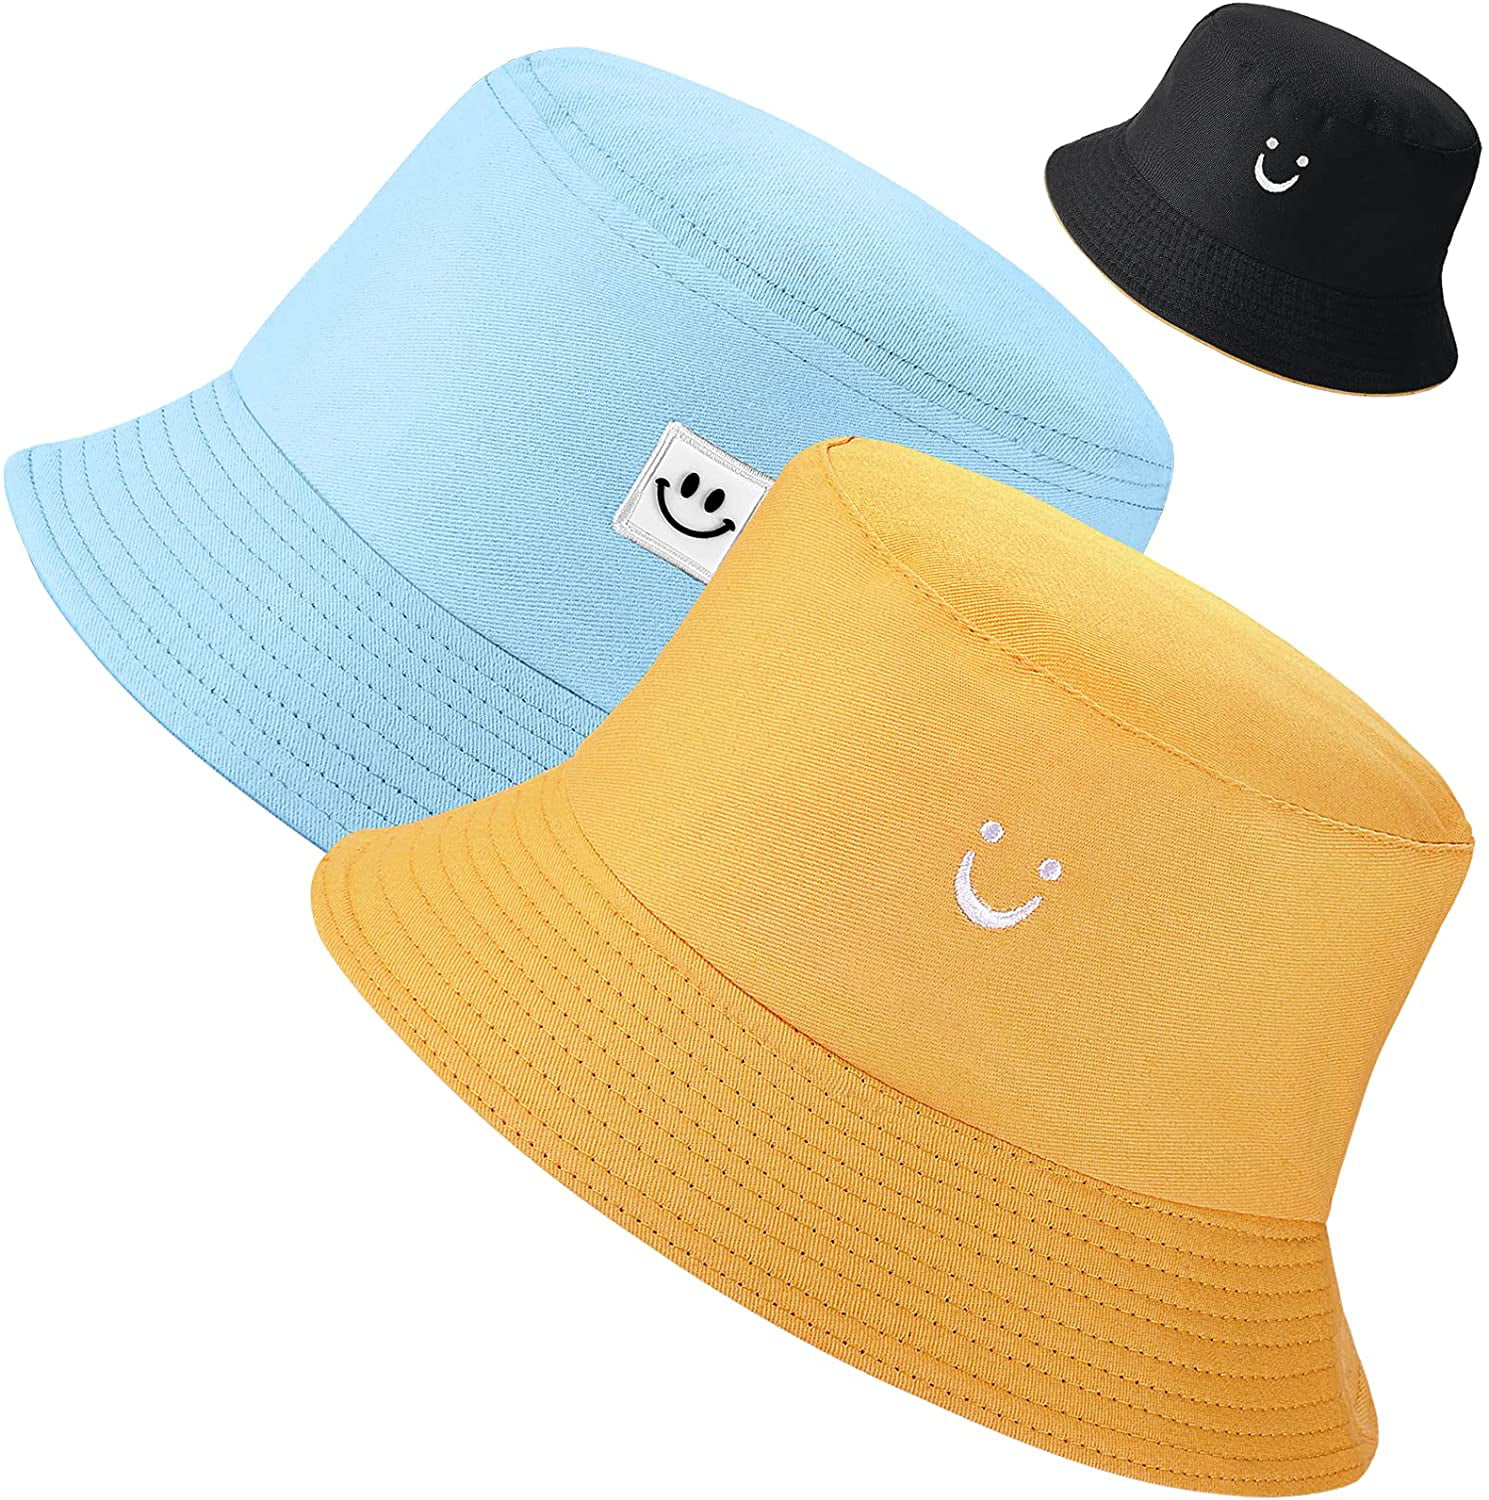 Bucket Hat Tie Dye Cotton Portable Foldable Travel Beach Sun Hat Outdoor Fisherman Cap 